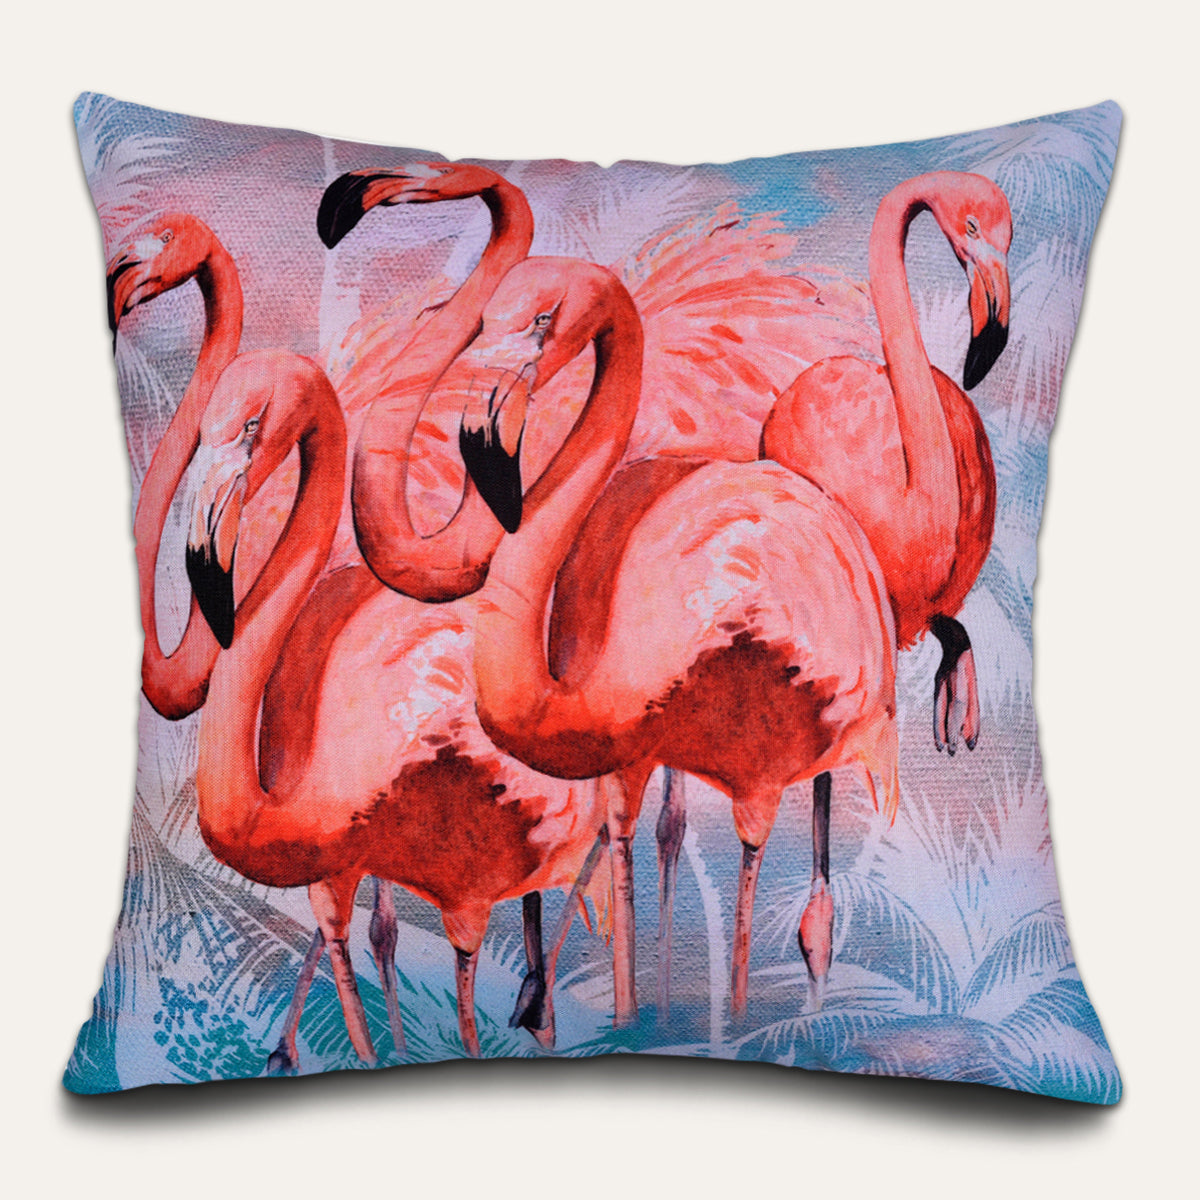 Flamingo Printed Throw Pillow Cover - Set of 4, 18 x 18 Inches - Decozen